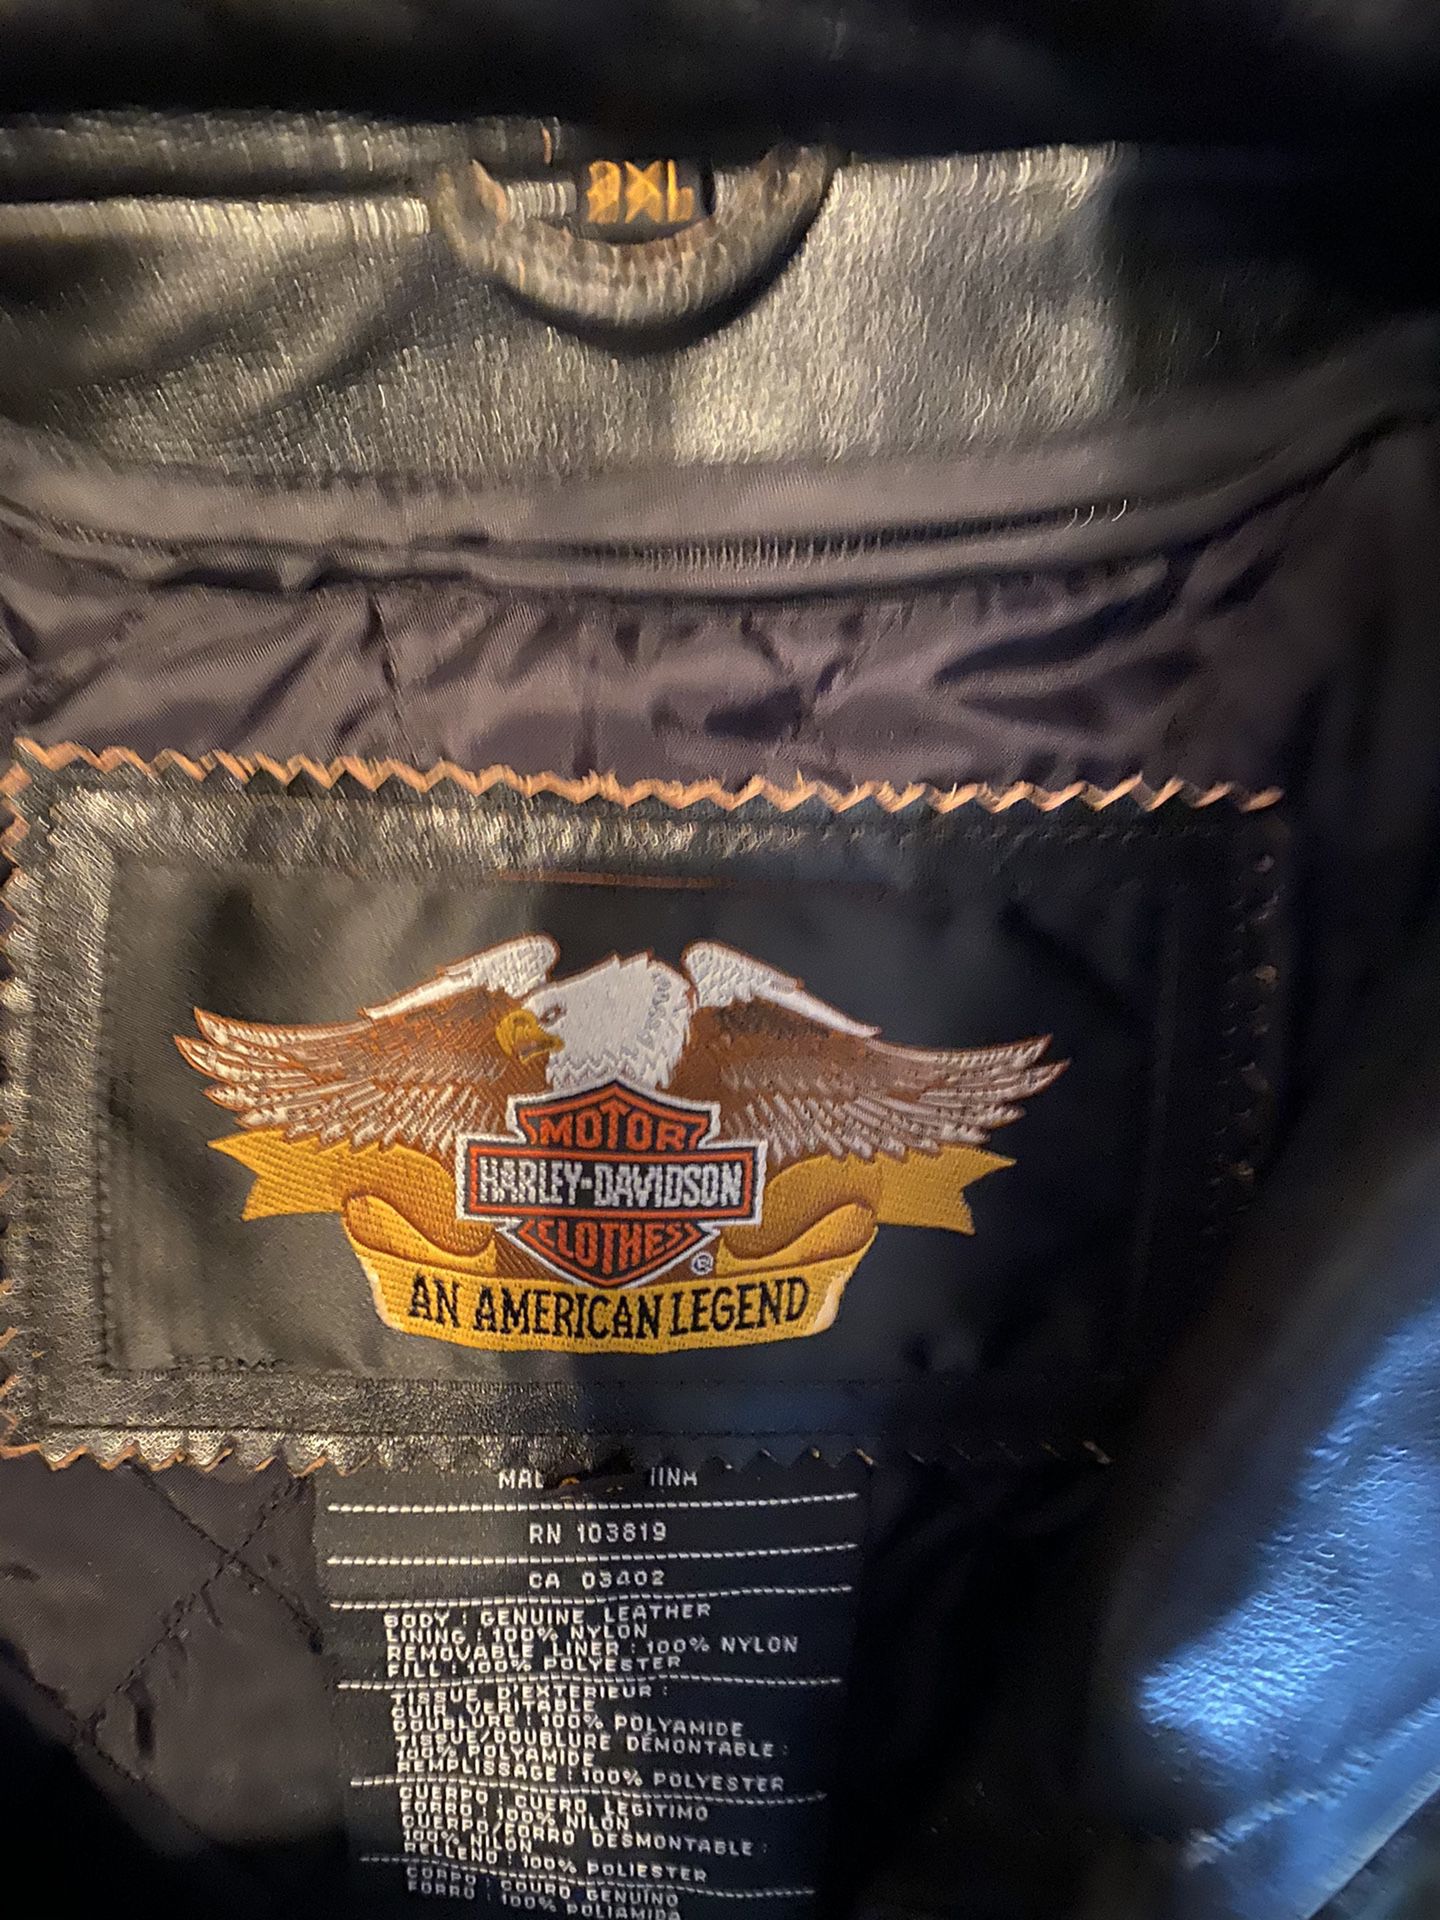 Harley Davidson vintage motorcycle riding jacket Authentic